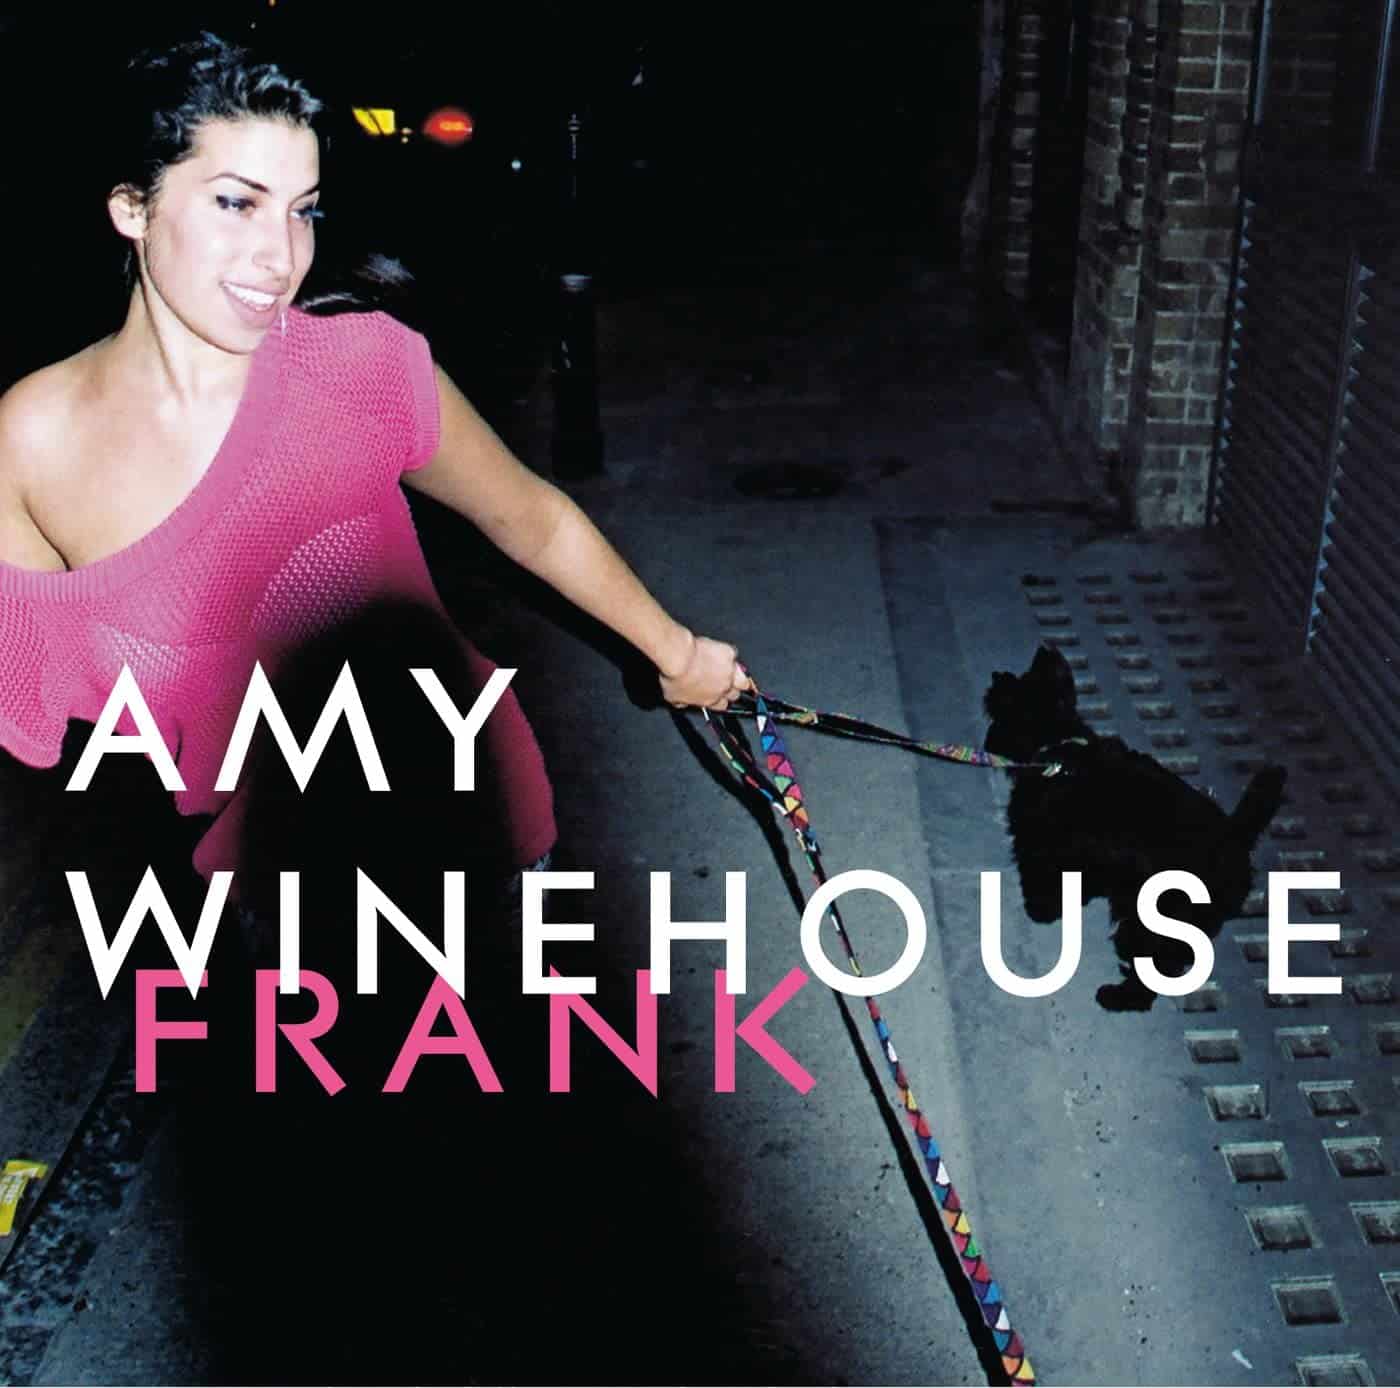 AMY WINEHOUSE - FRANK (PINK)